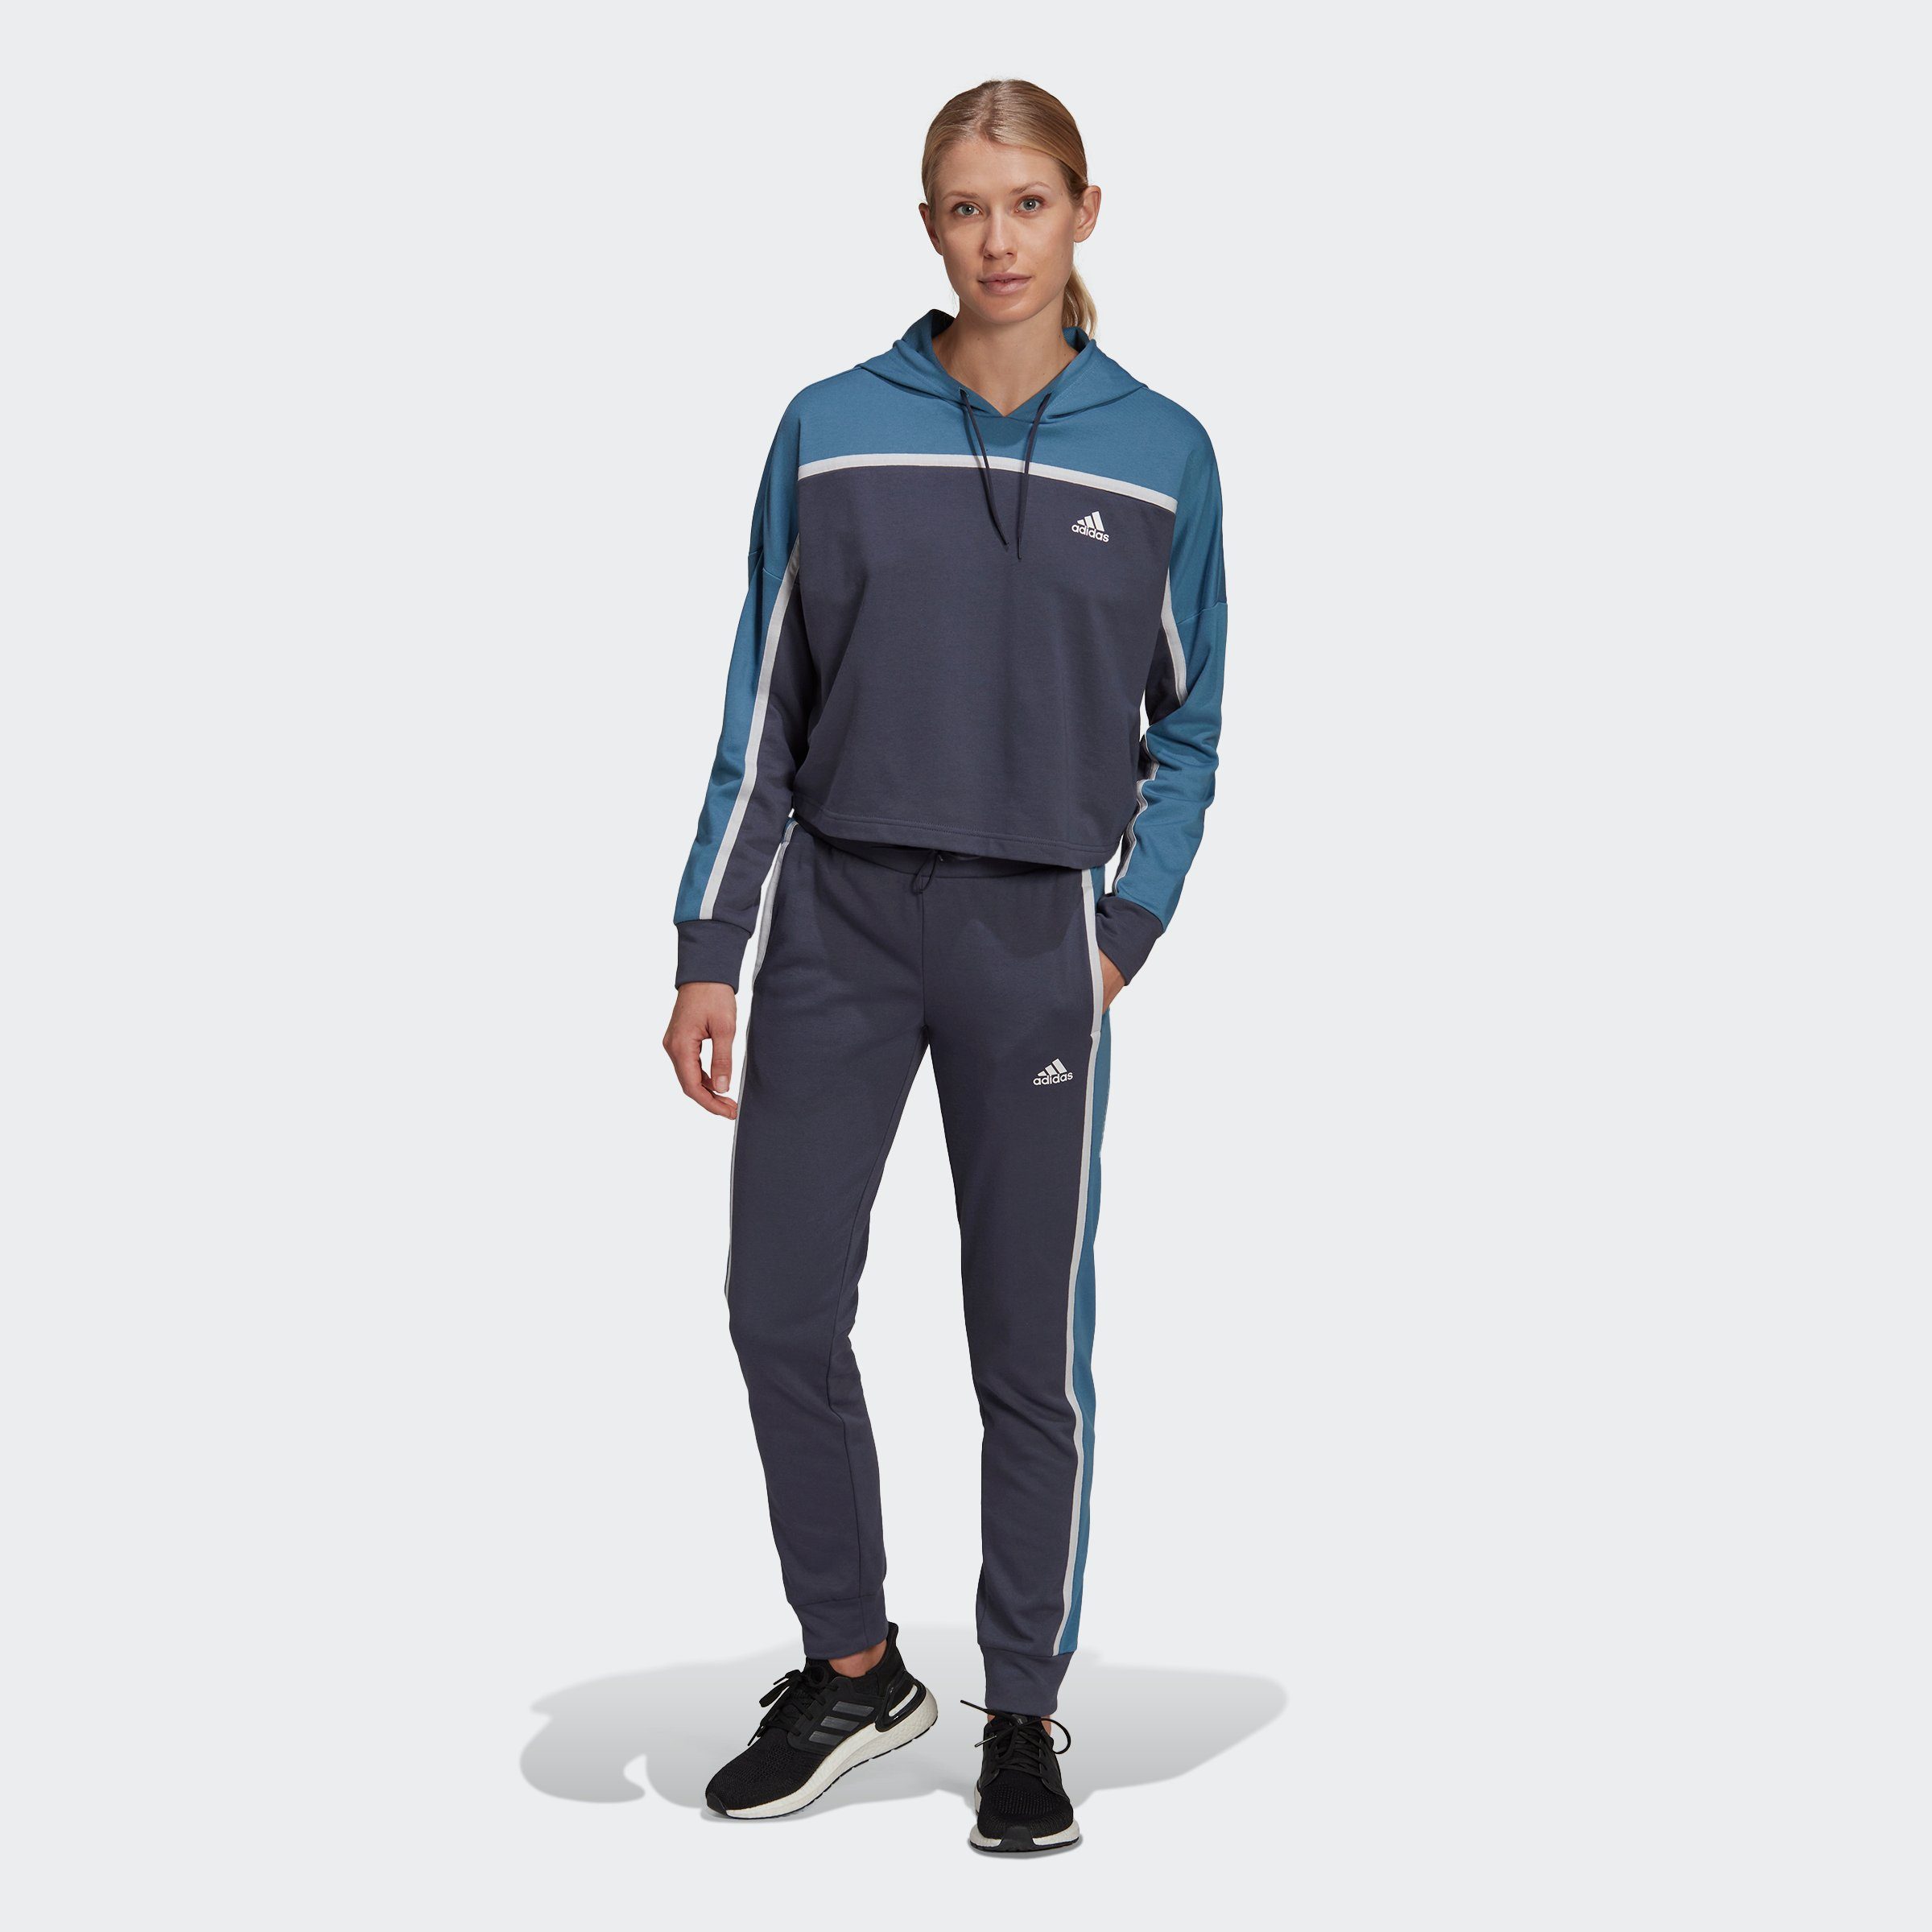 adidas Damen-Trainingsanzüge kaufen » Jogginganzüge | OTTO